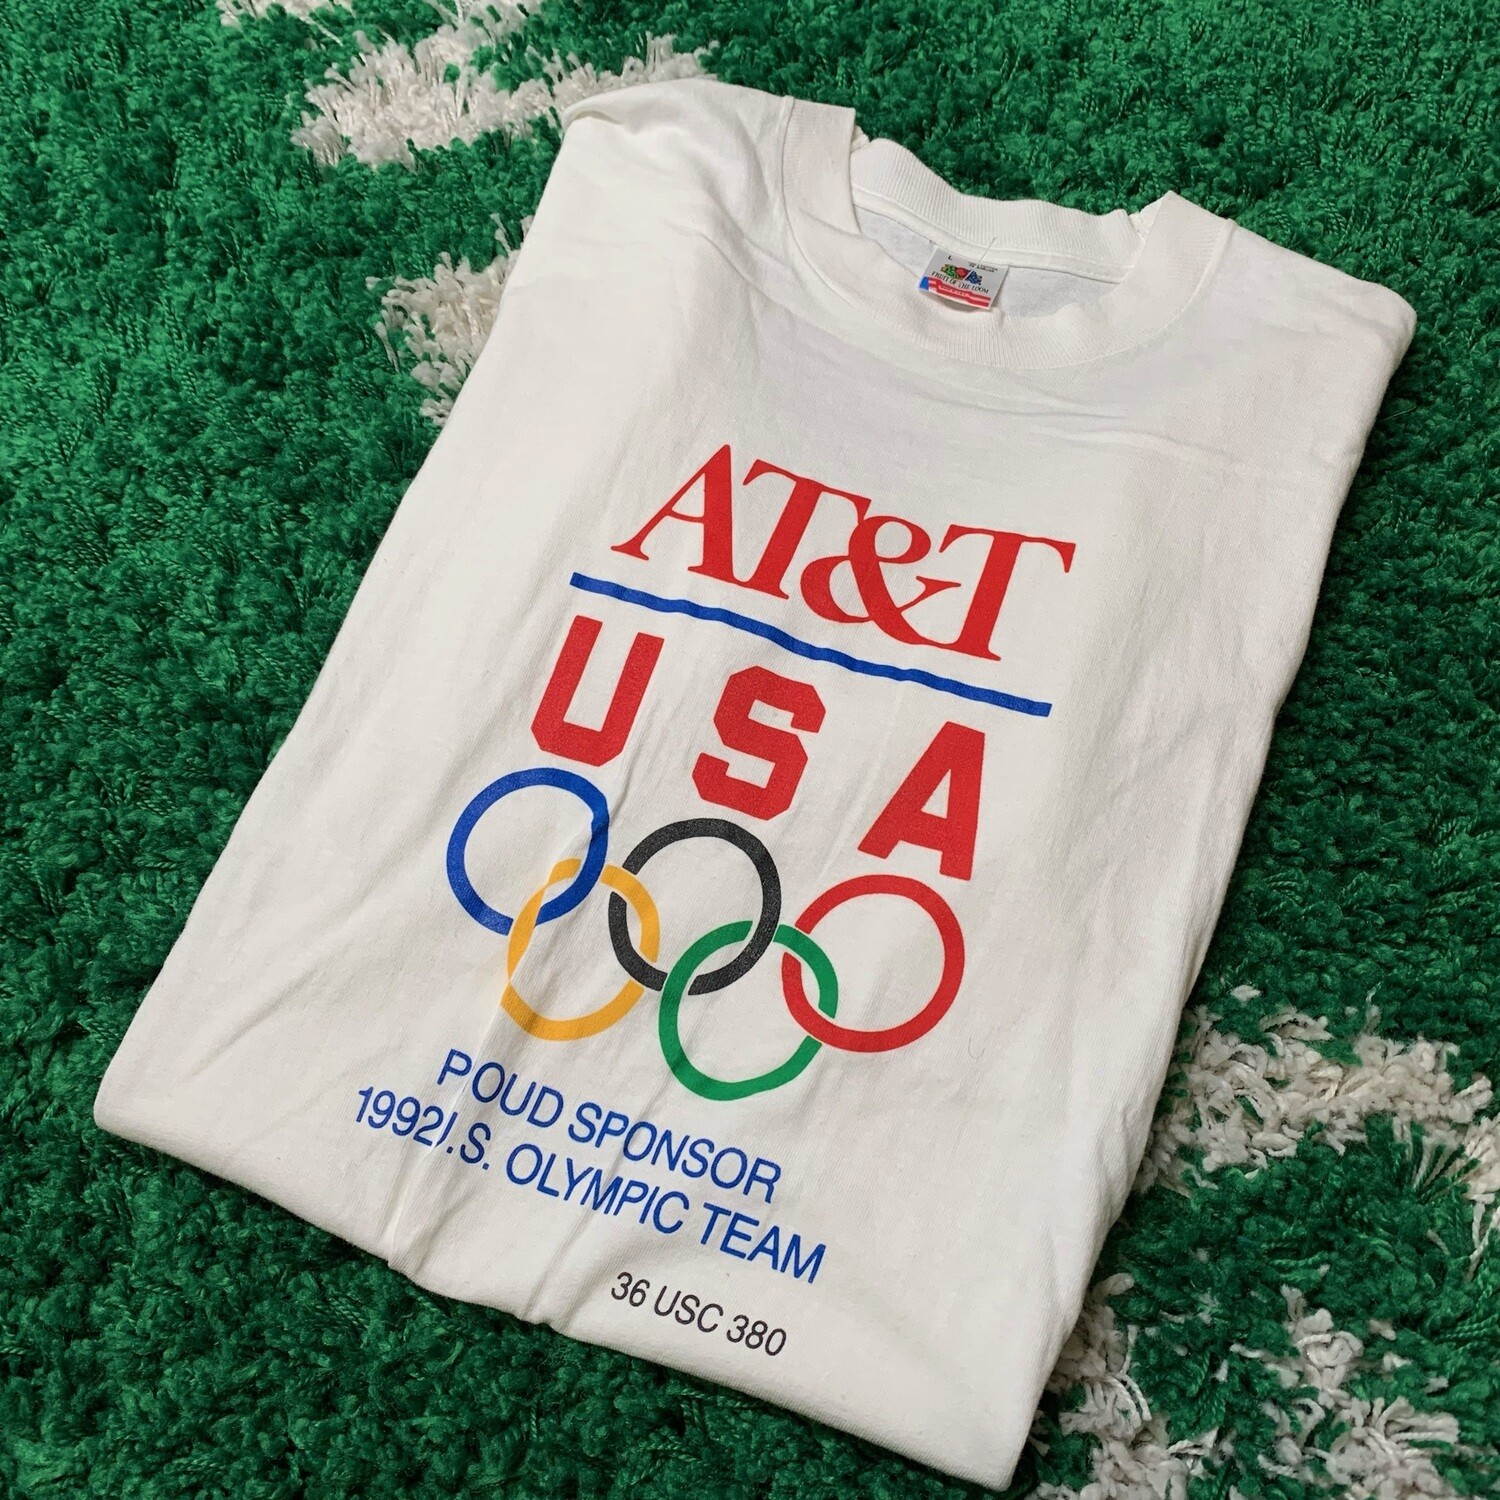 AT&T USA Proud Sponsor 1992 Olympic Team Size Medium